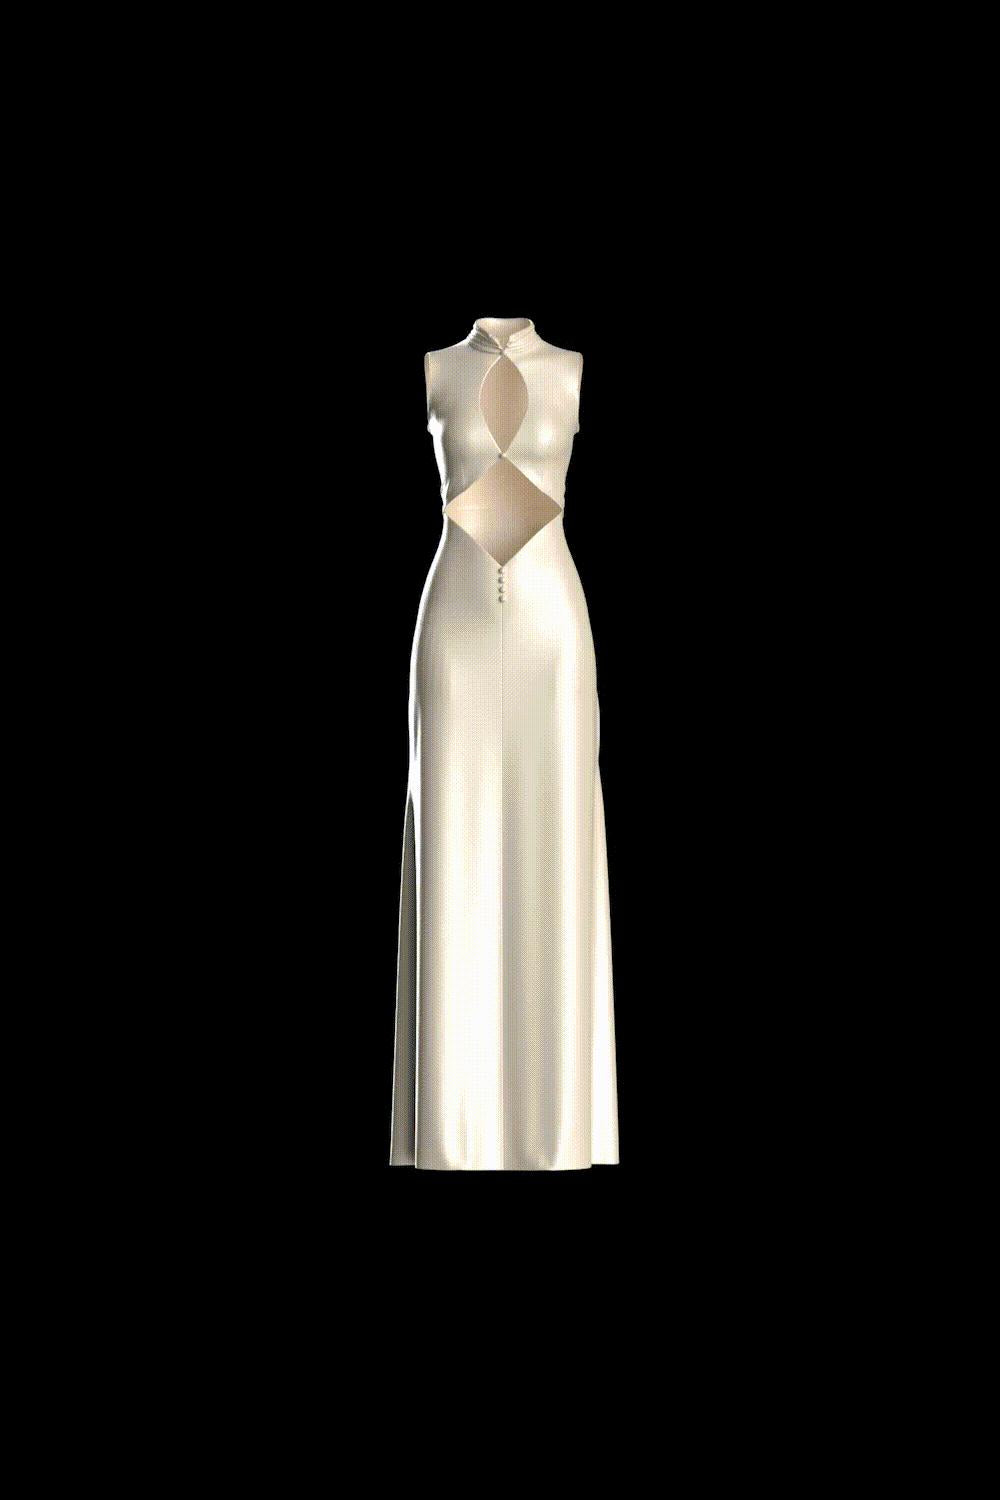 Chandelier Sleeveless Dress (Swarovski Edition)